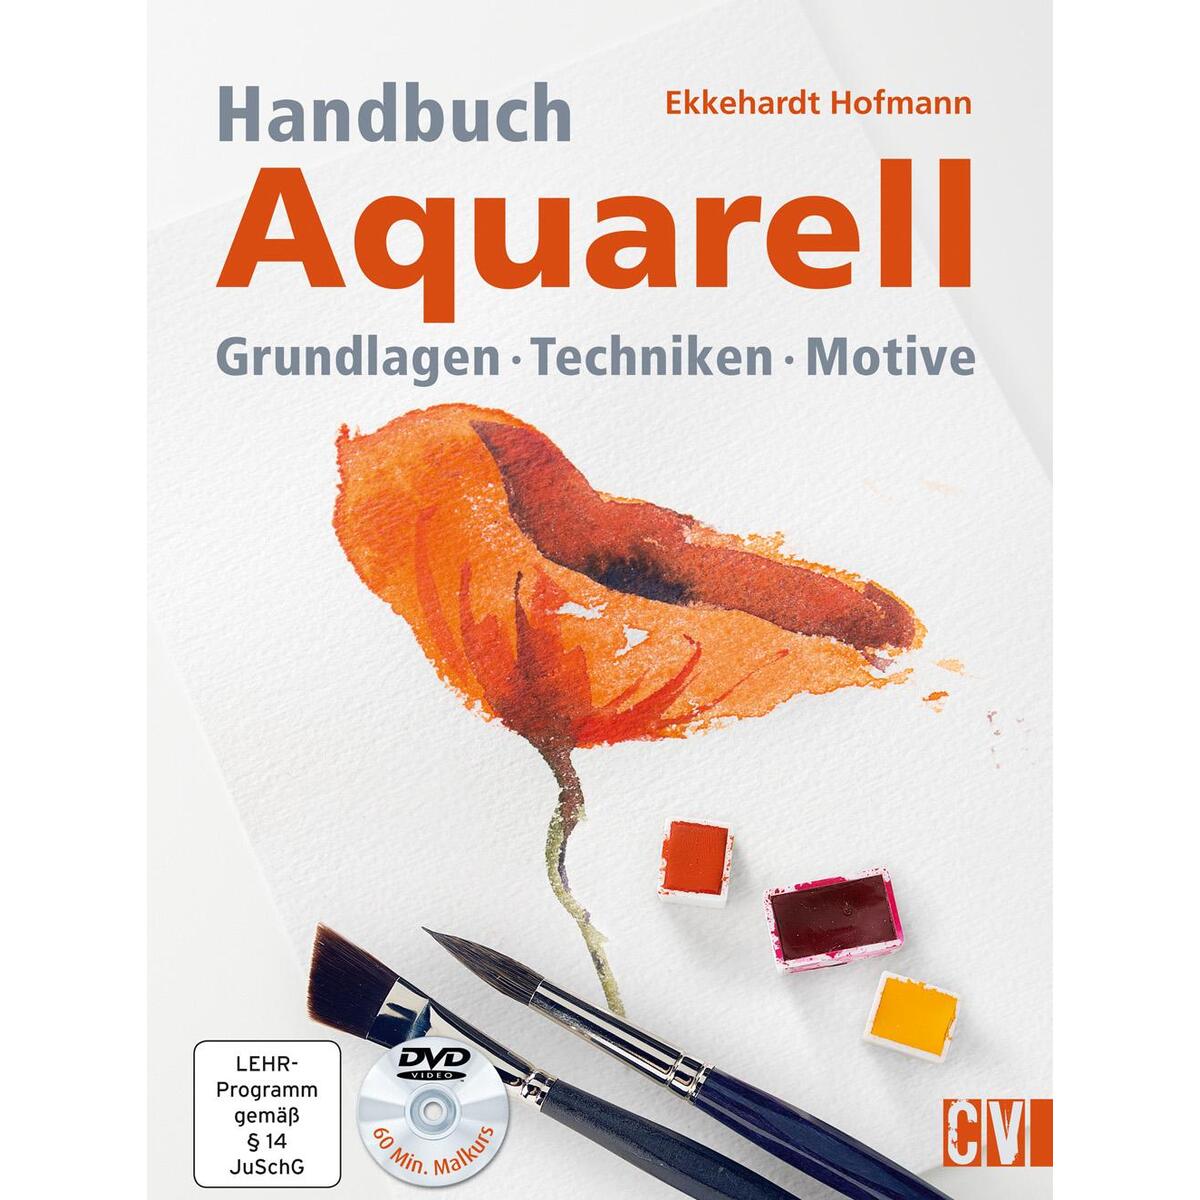 Handbuch Aquarell von Christophorus Verlag